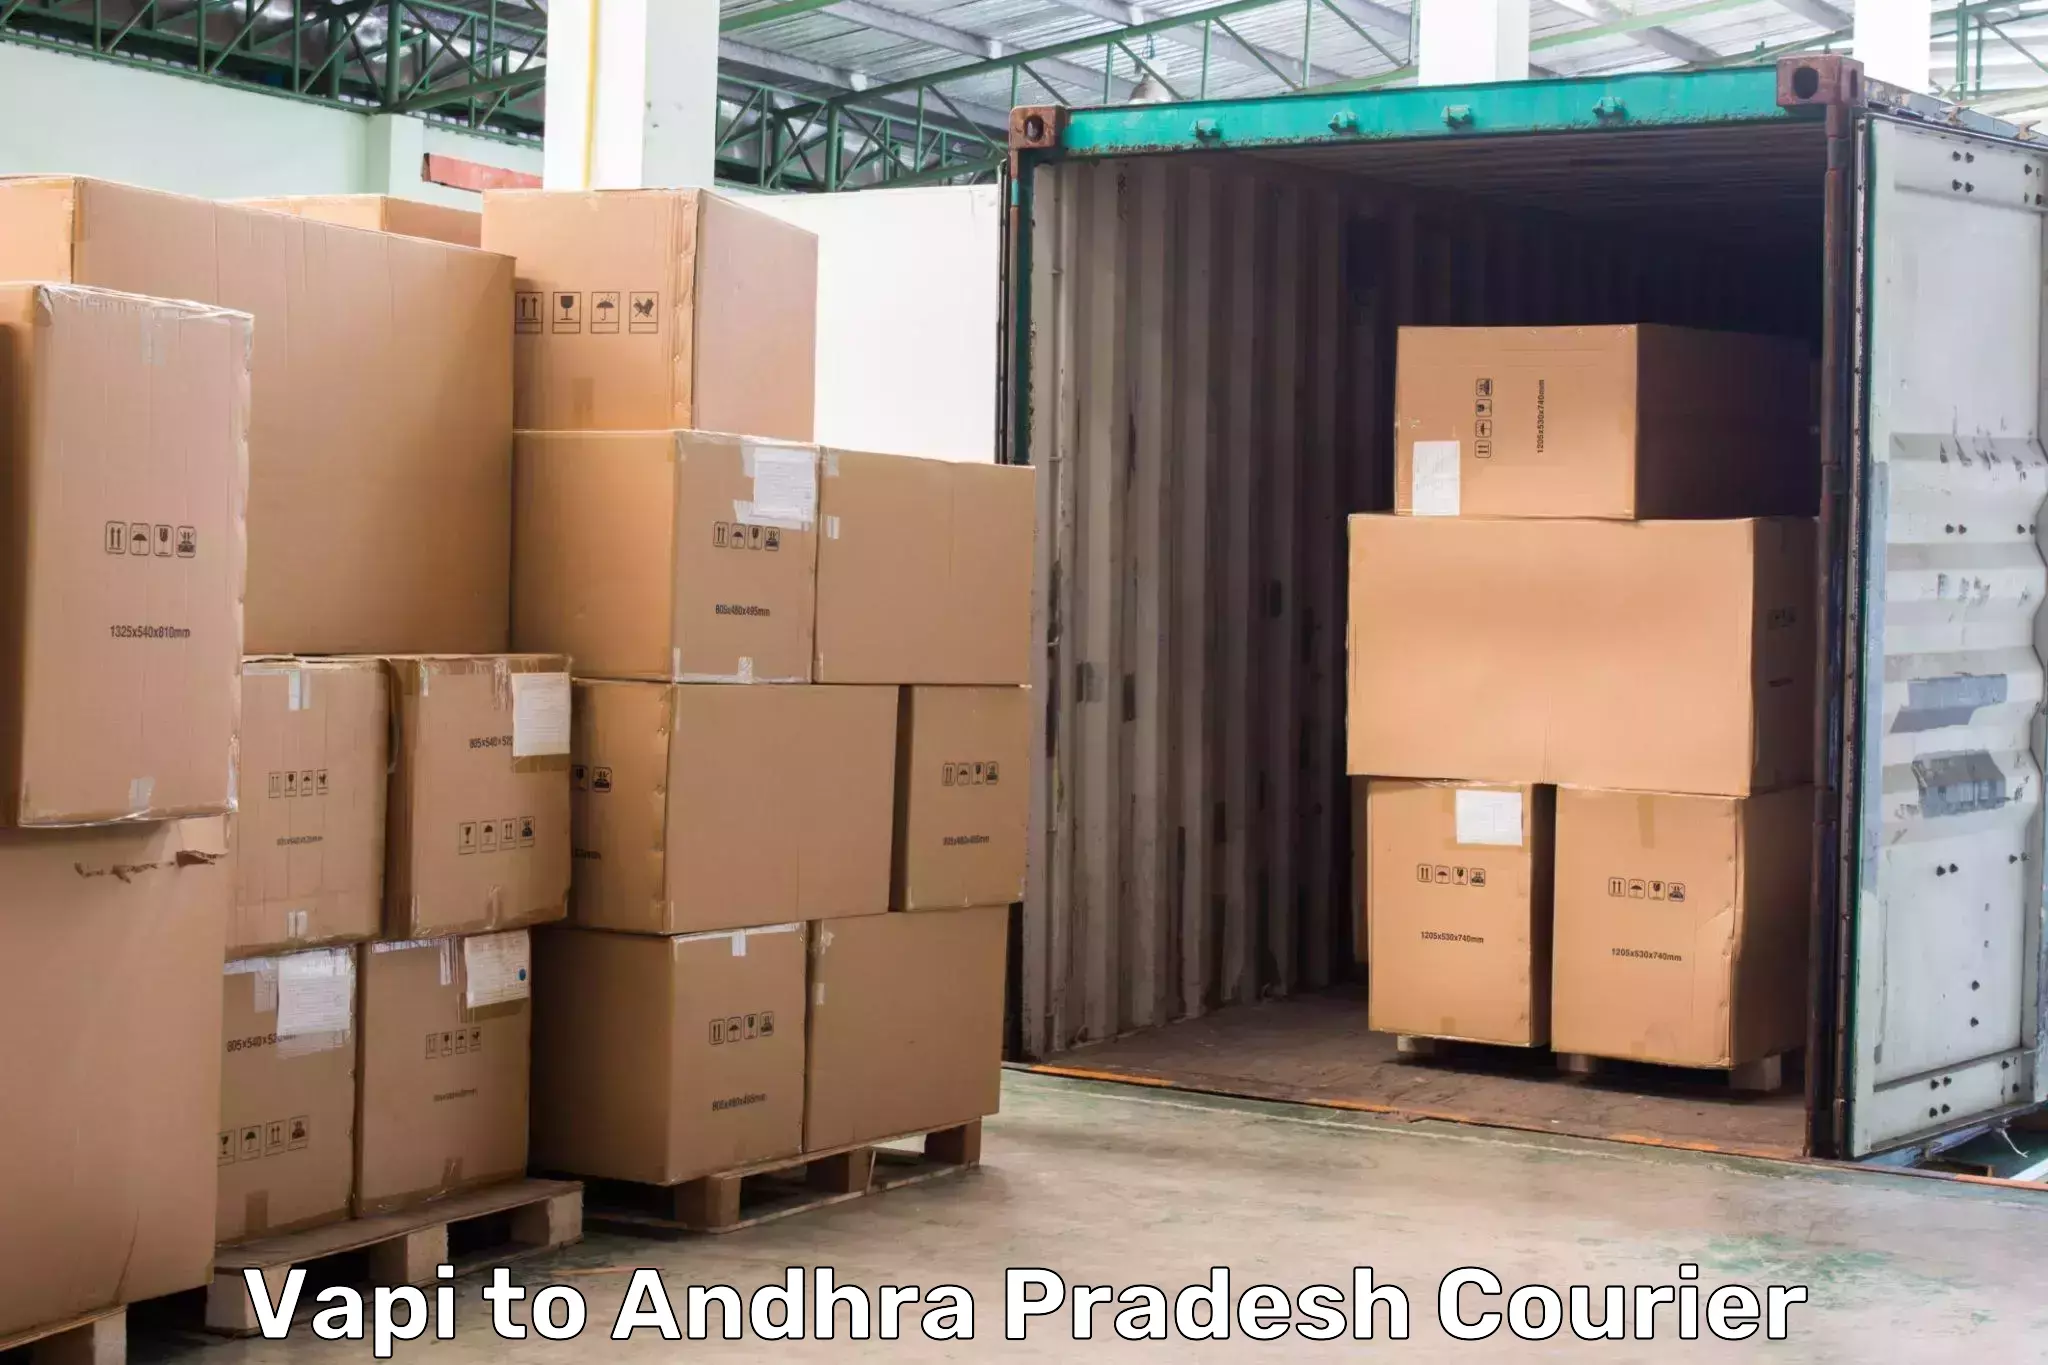 State-of-the-art courier technology Vapi to Devarapalli